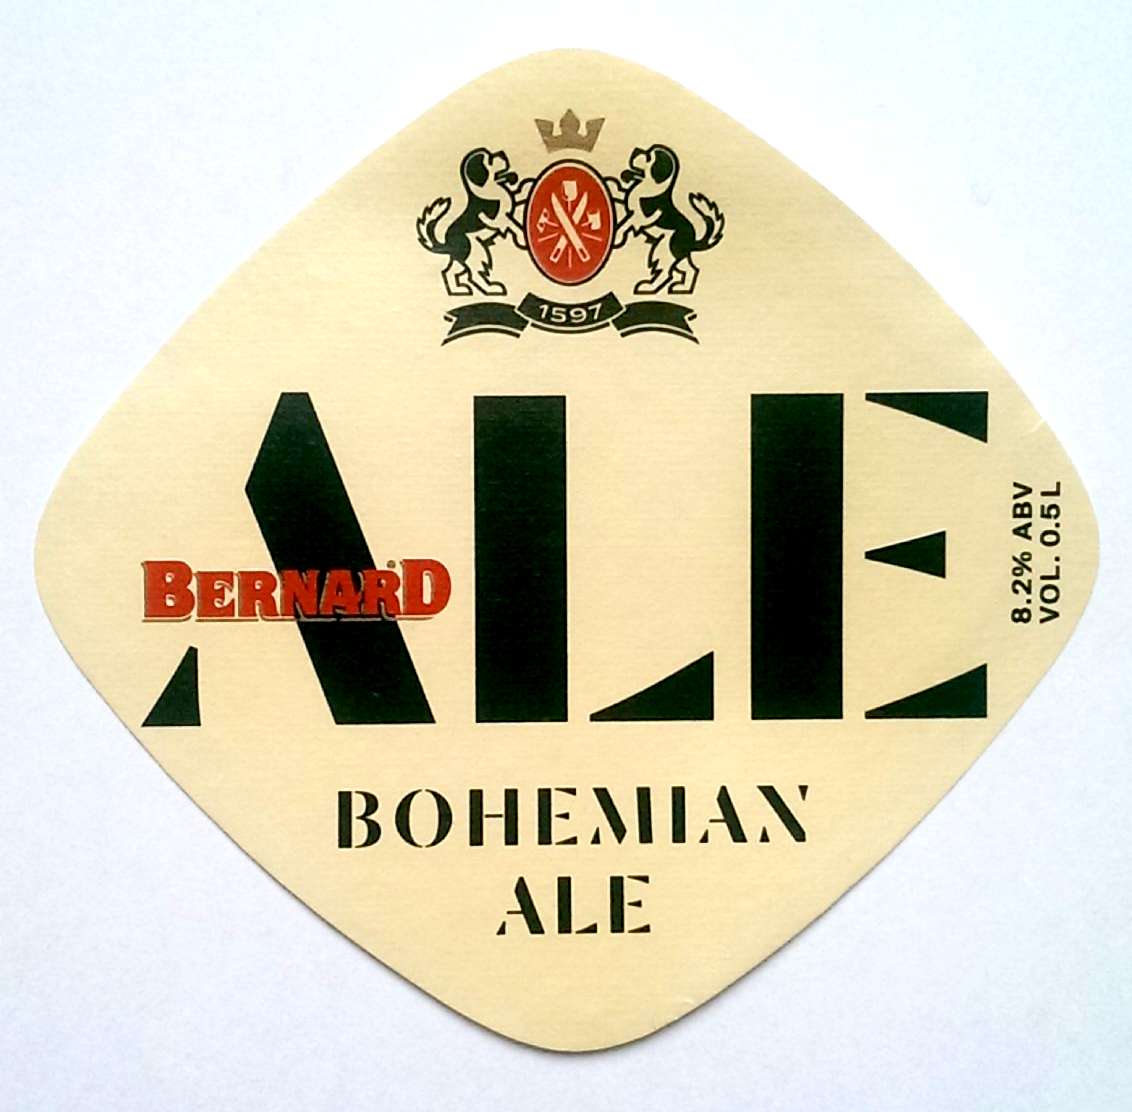 Bernard Bohemian ALE 0,5L v2